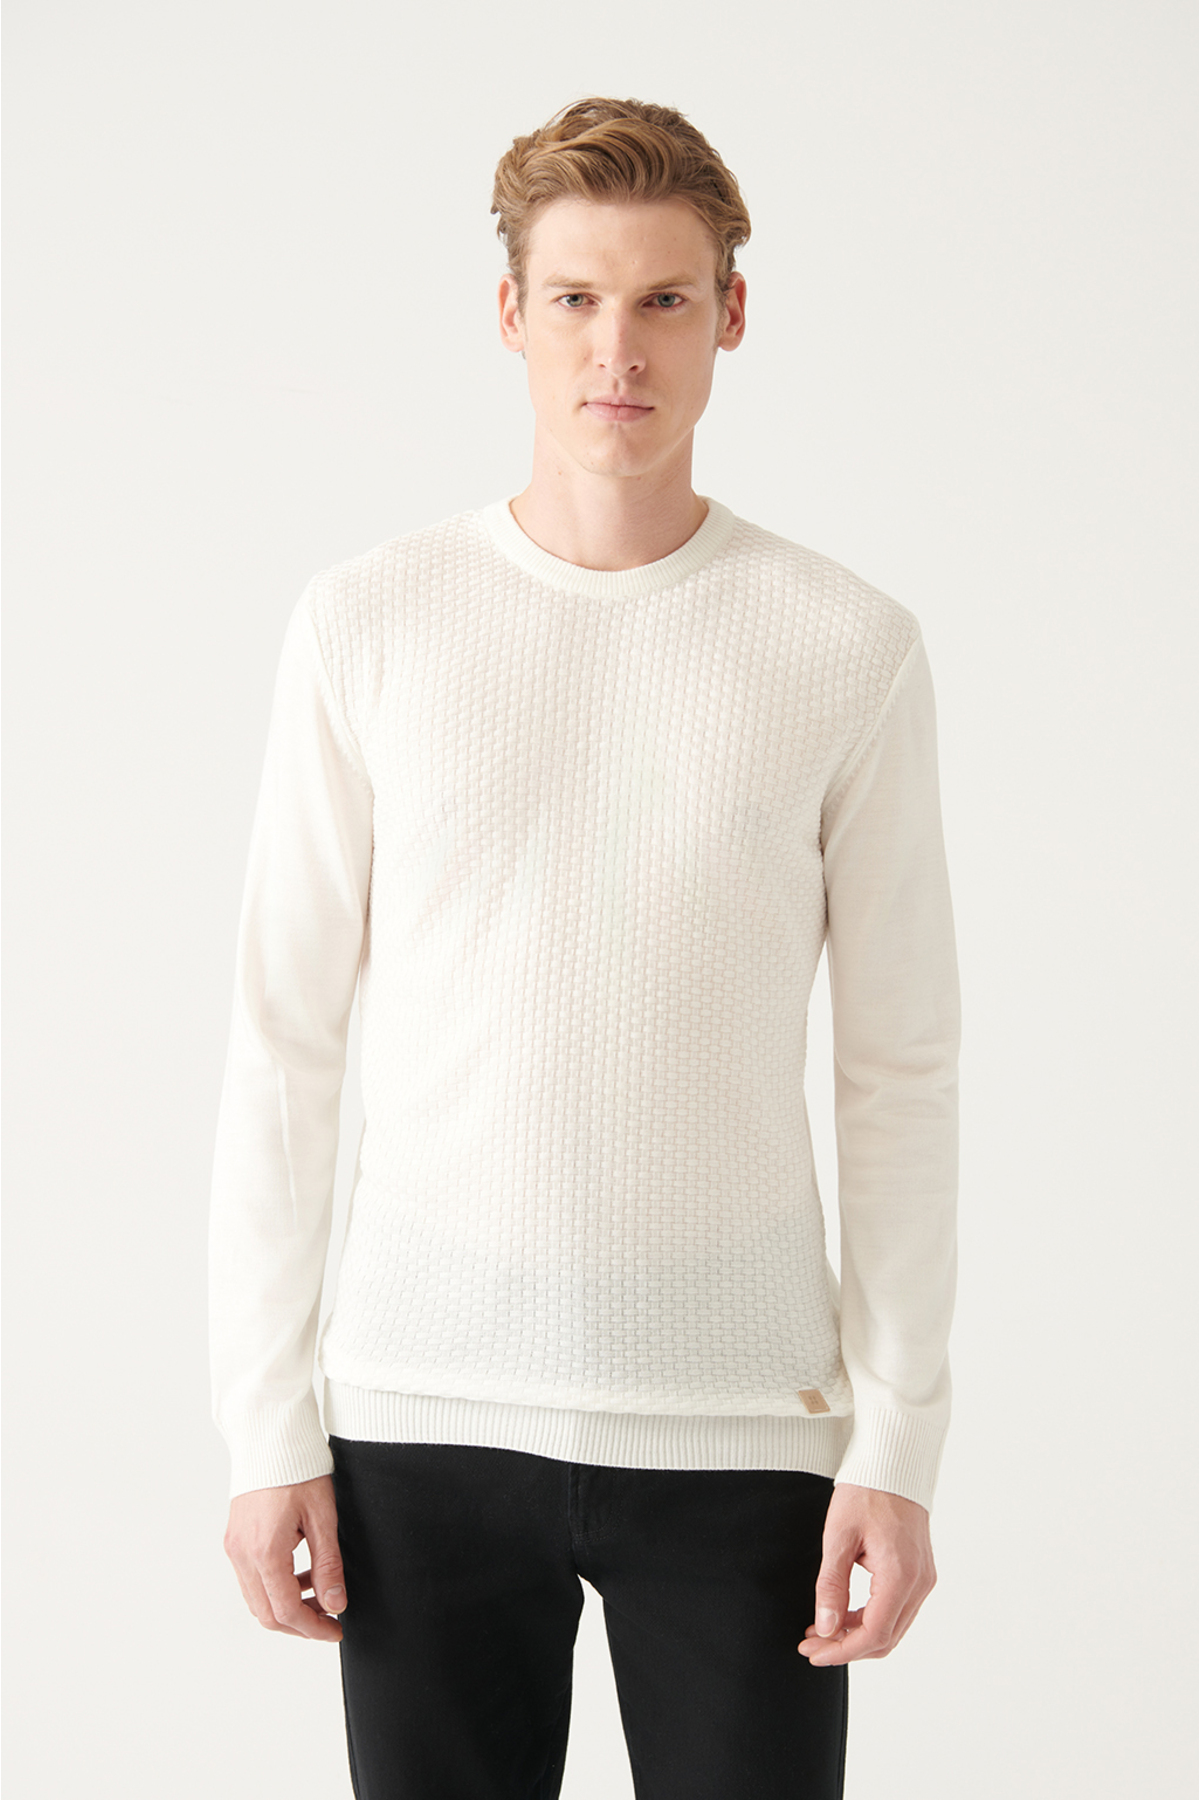 Avva Men's White Crew Neck Front Textured Standard Fit Normal Cut Knitwear Sweater